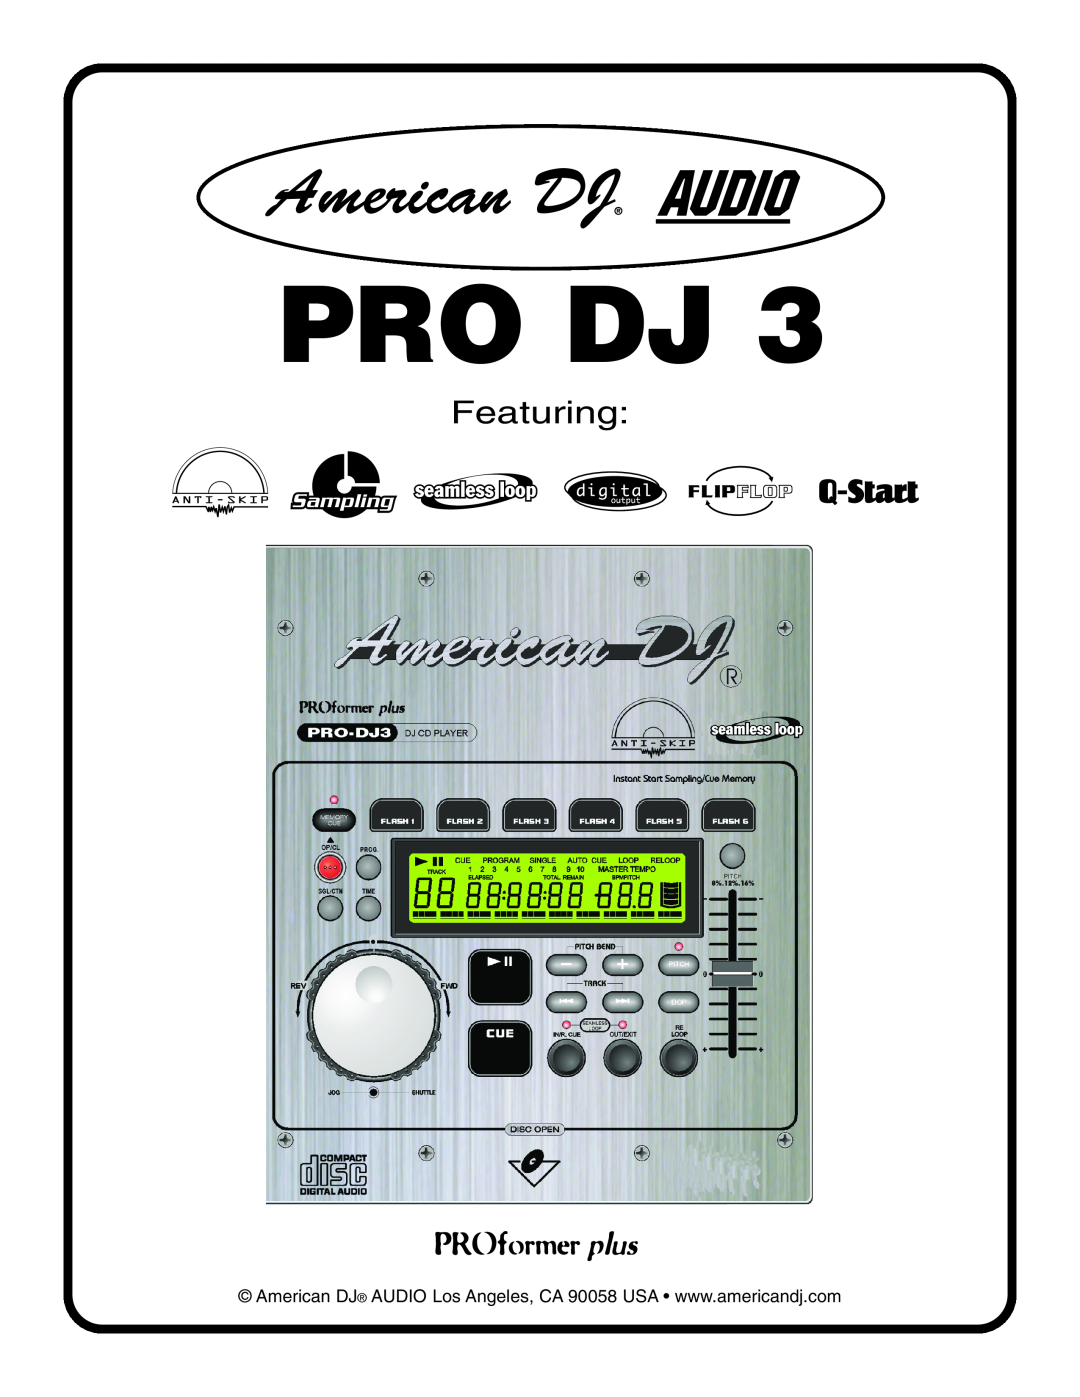 American Audio PRO DJ 3 manual Pro Dj, Featuring, Sampling, Flipflop 